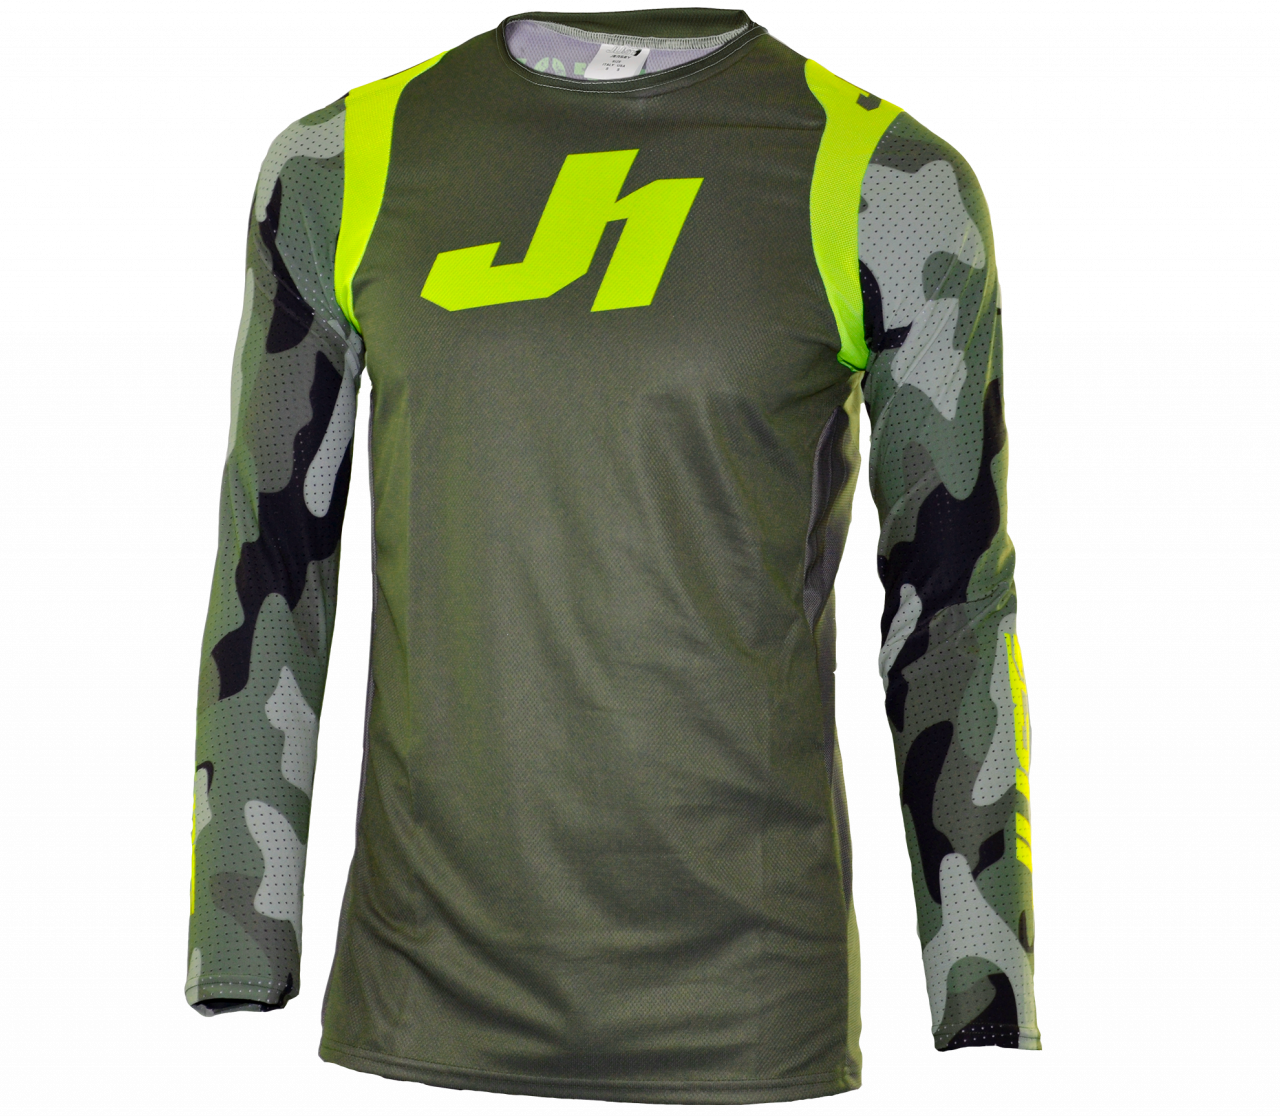 Jersey J-Flex Army Limited Edition